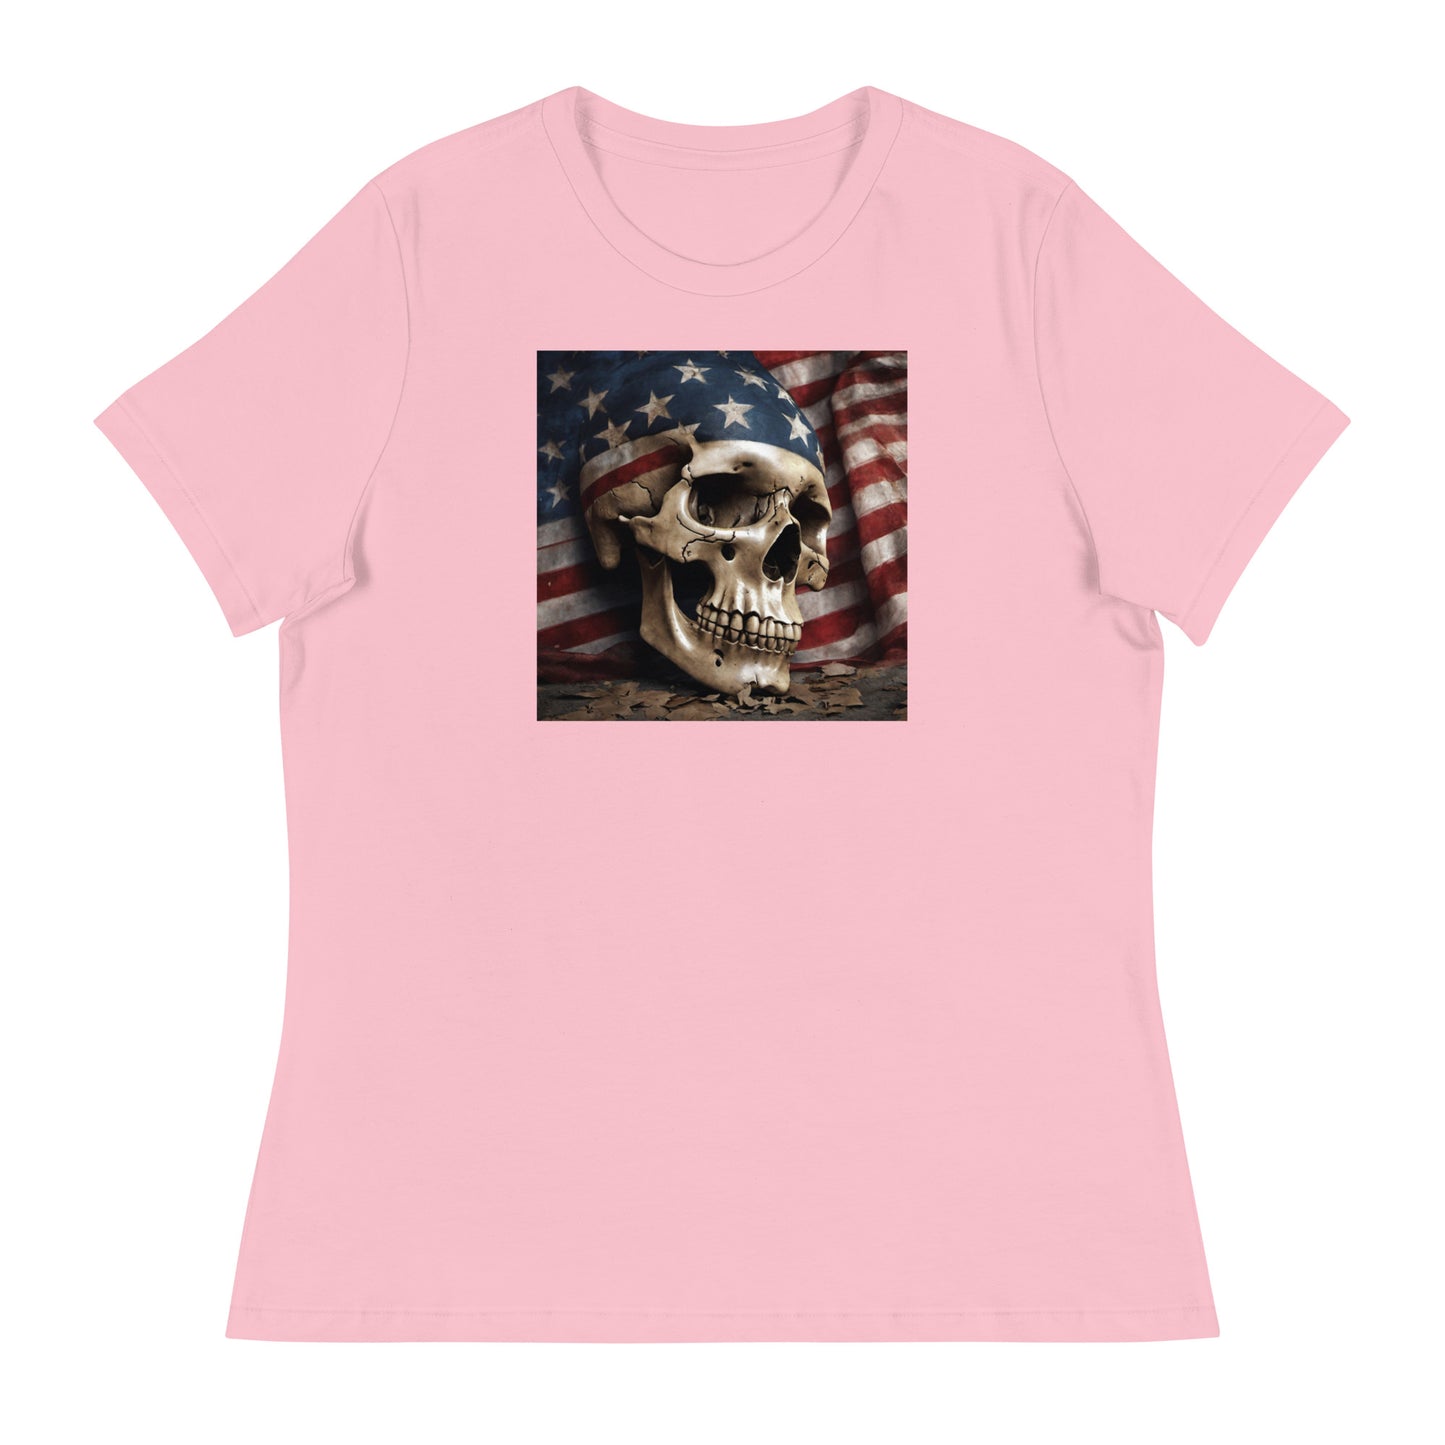 Skull and Flag Print Women's T-Shirt Pink